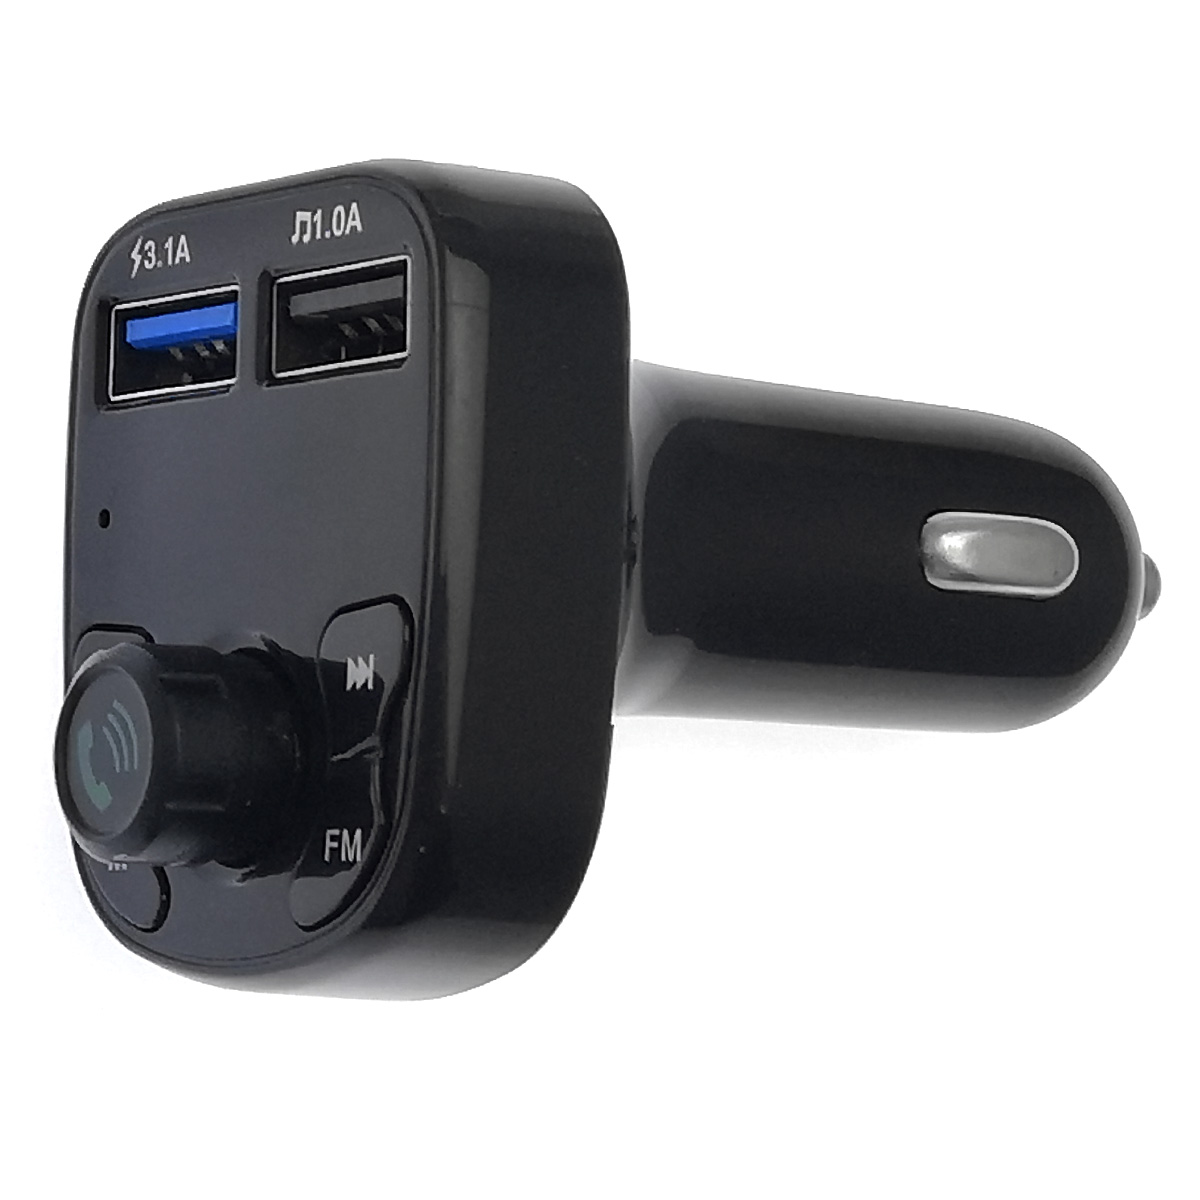 FM-модулятор X16, 2 USB, MP3, 3.1A, Bluetooth 3.0, цвет черный